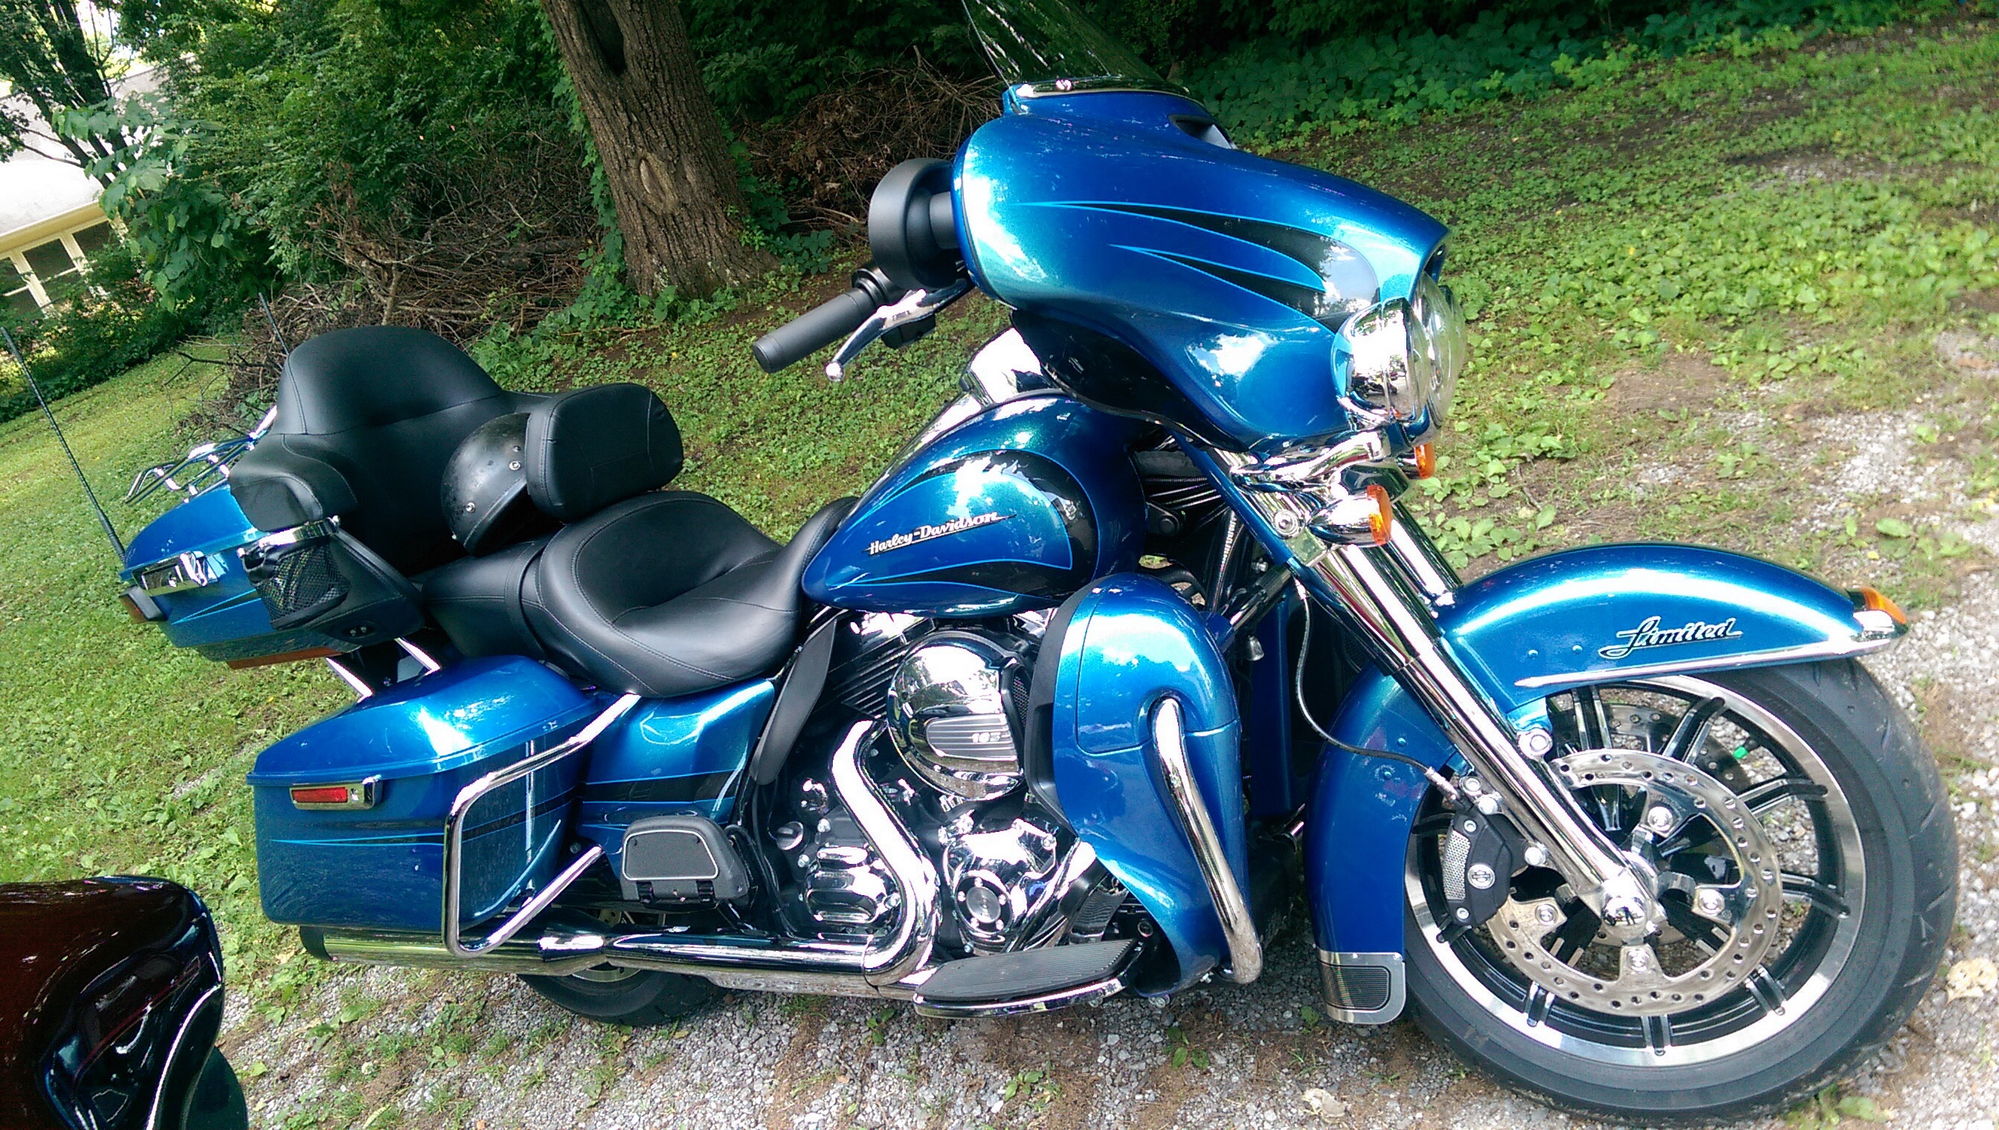 Daytona Blue Pearl....let's see your rides - Harley Davidson Forums